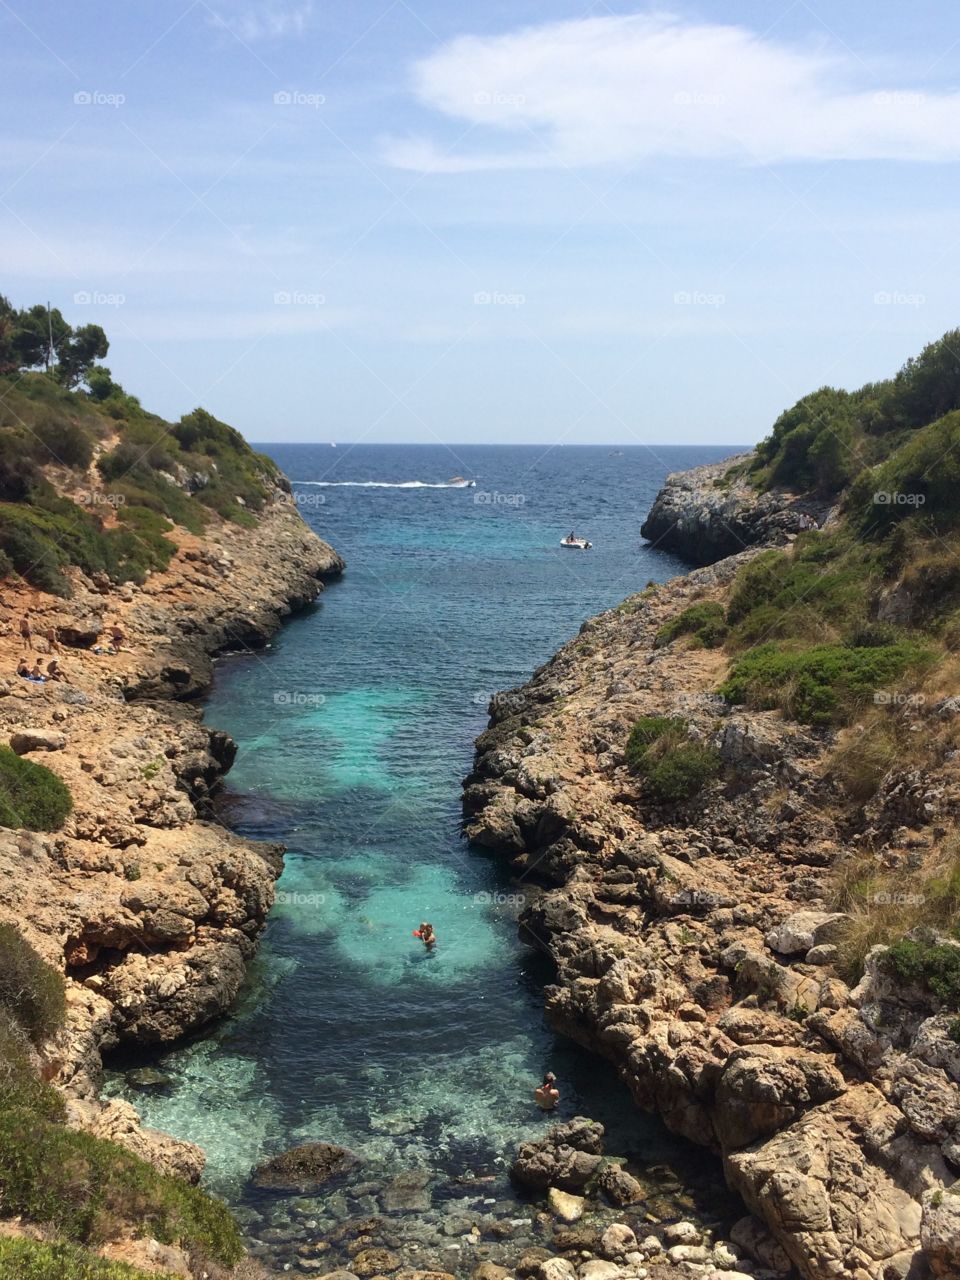 A lovely bay in Mallorca
